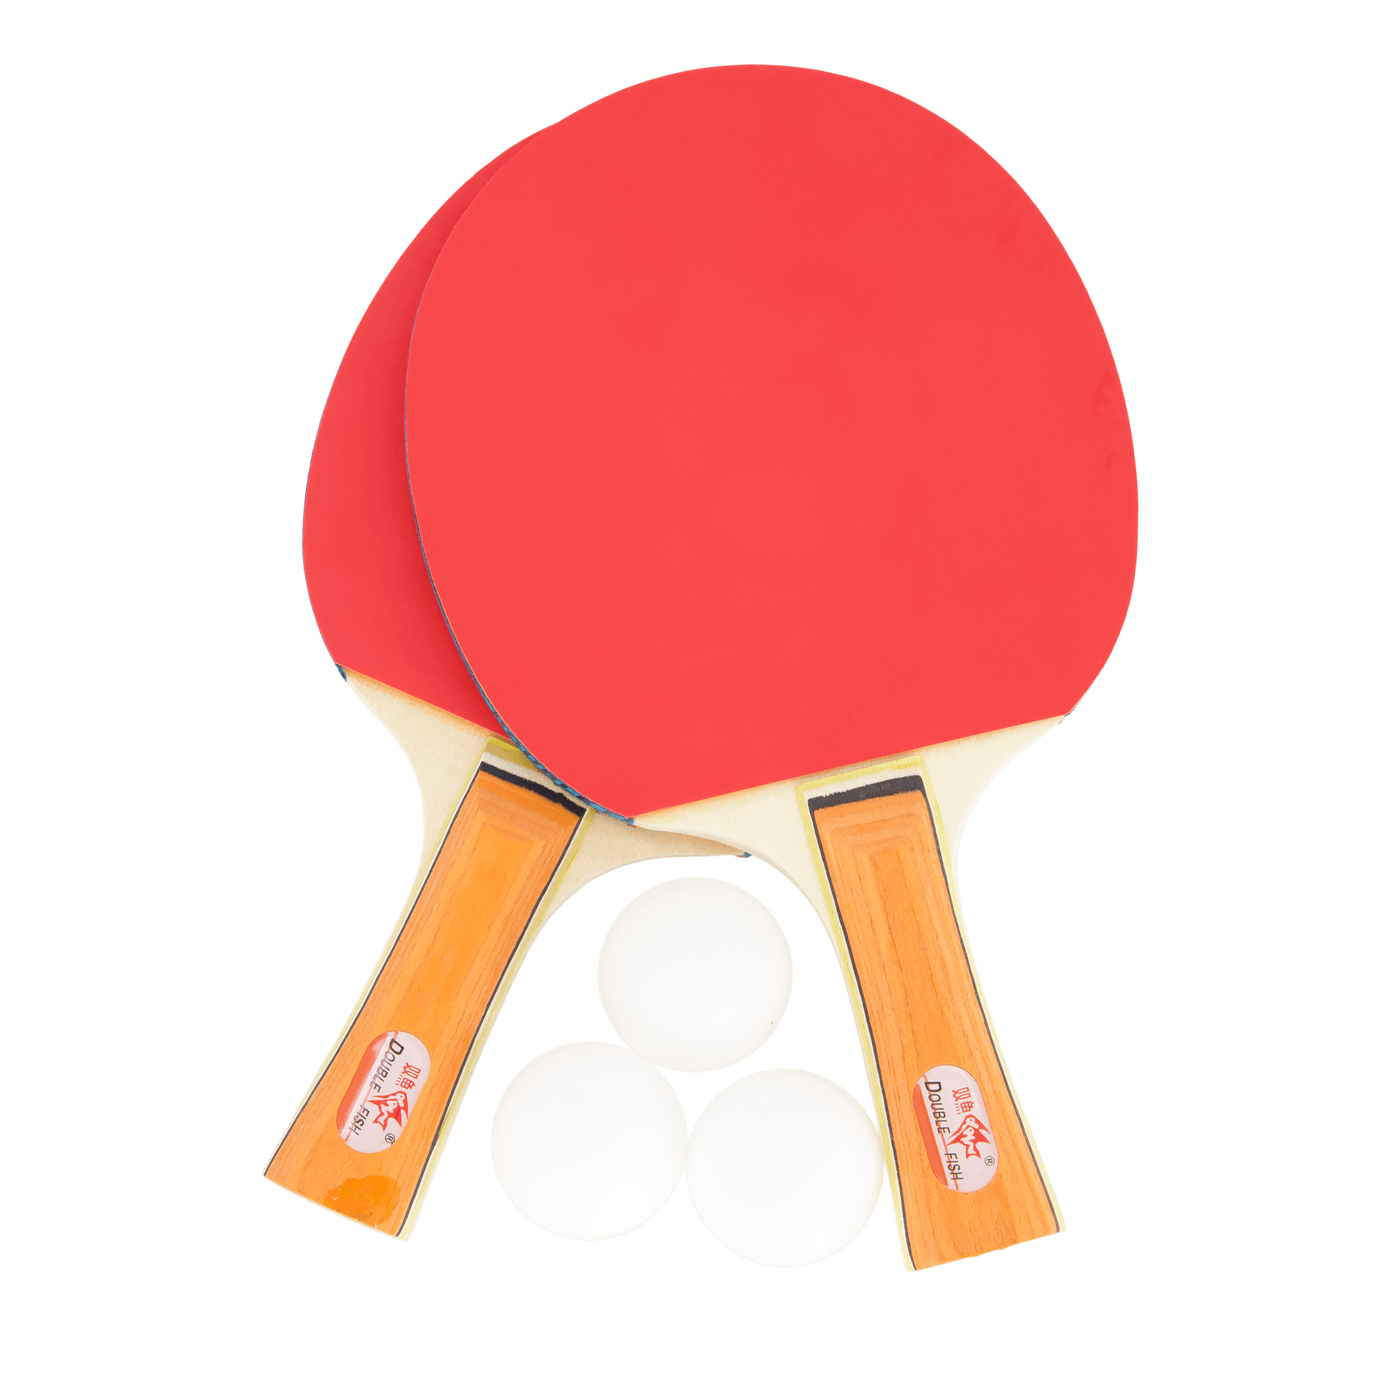 036a Table Tennis Set